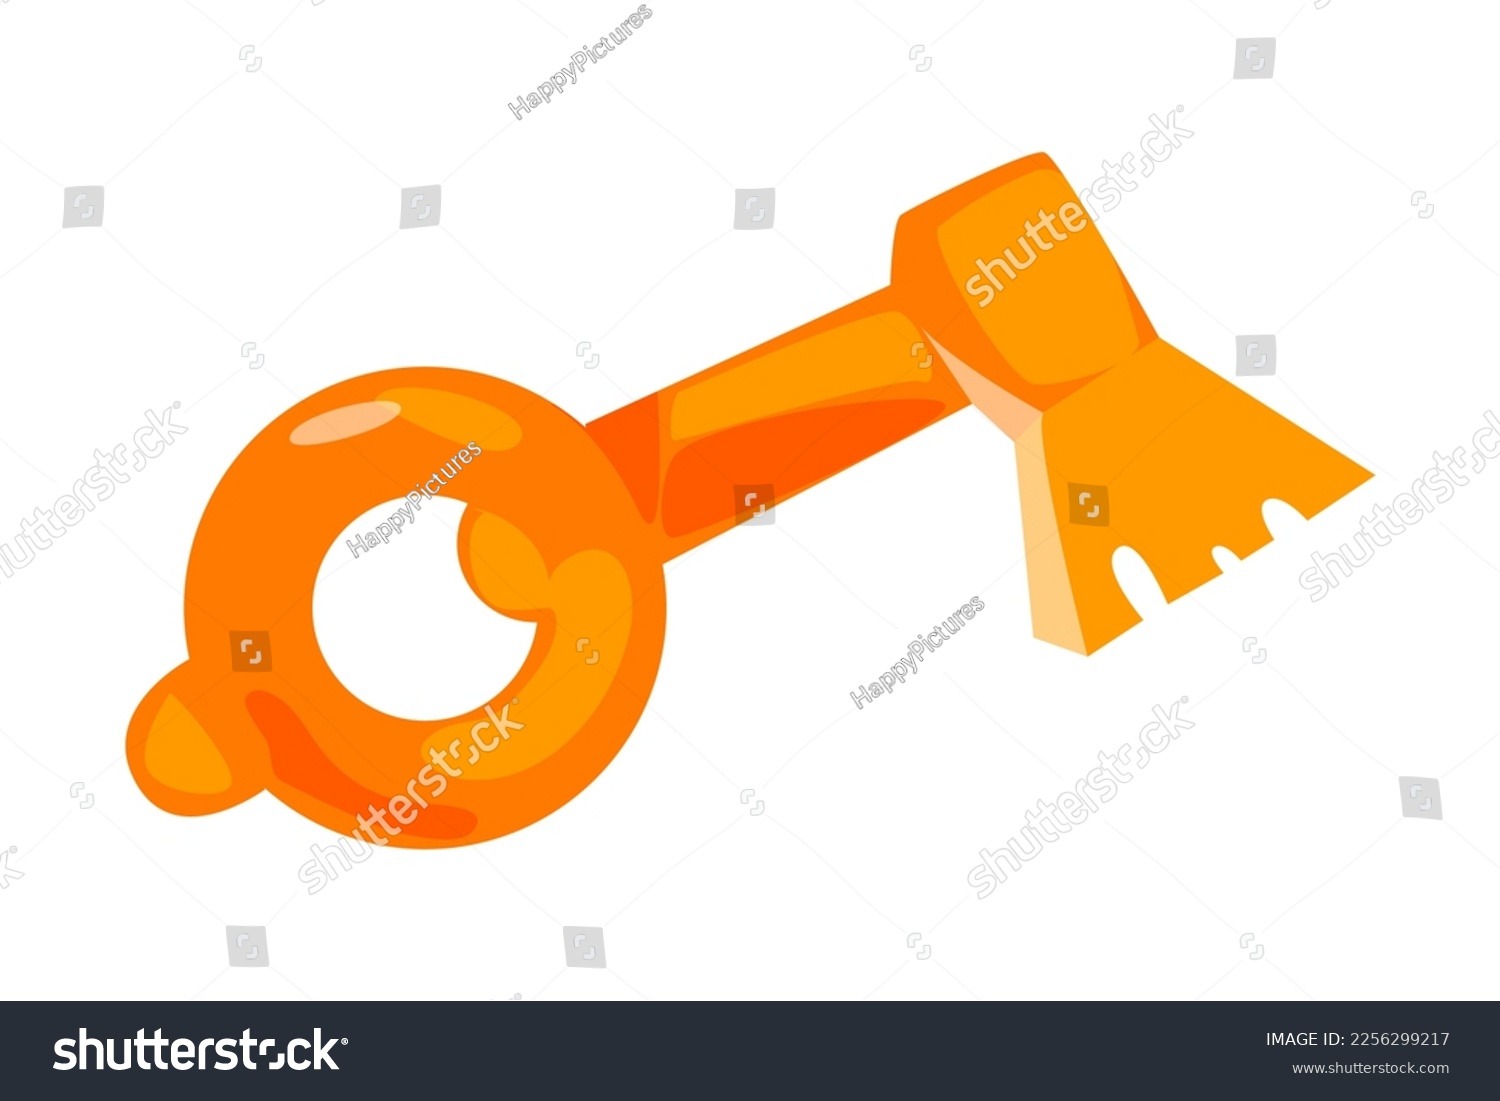 SVG of Golden Key as Game Object Closeup Vector Illustration svg